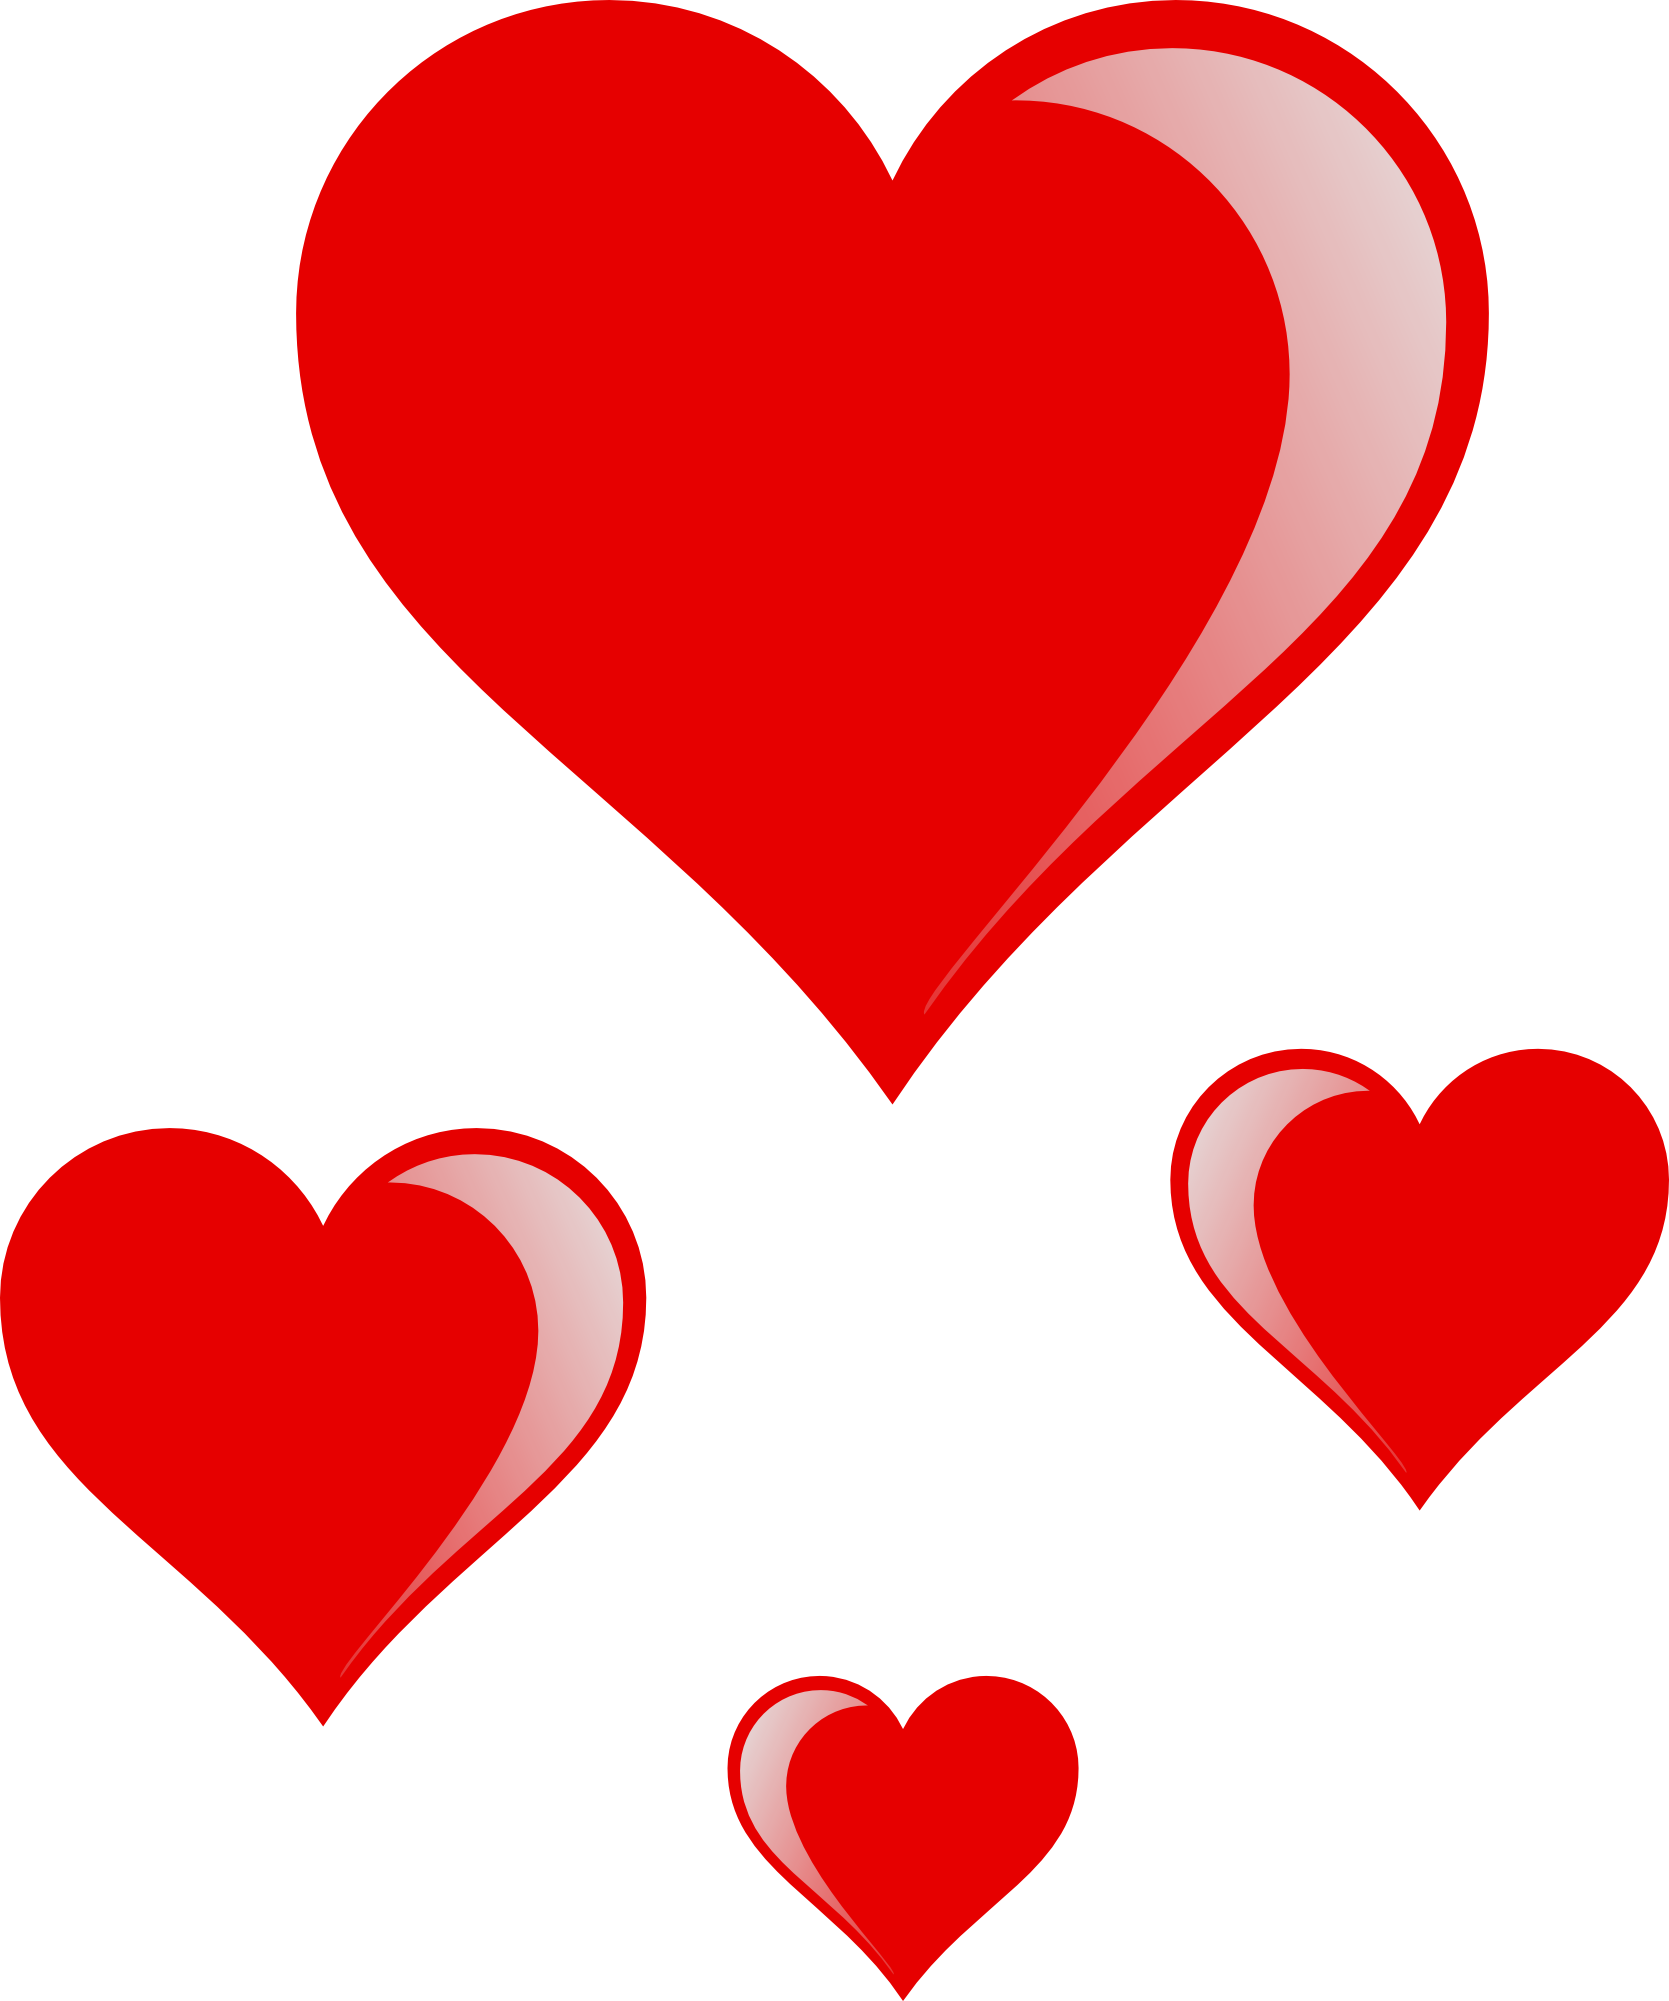 clipart valentine heart - photo #14